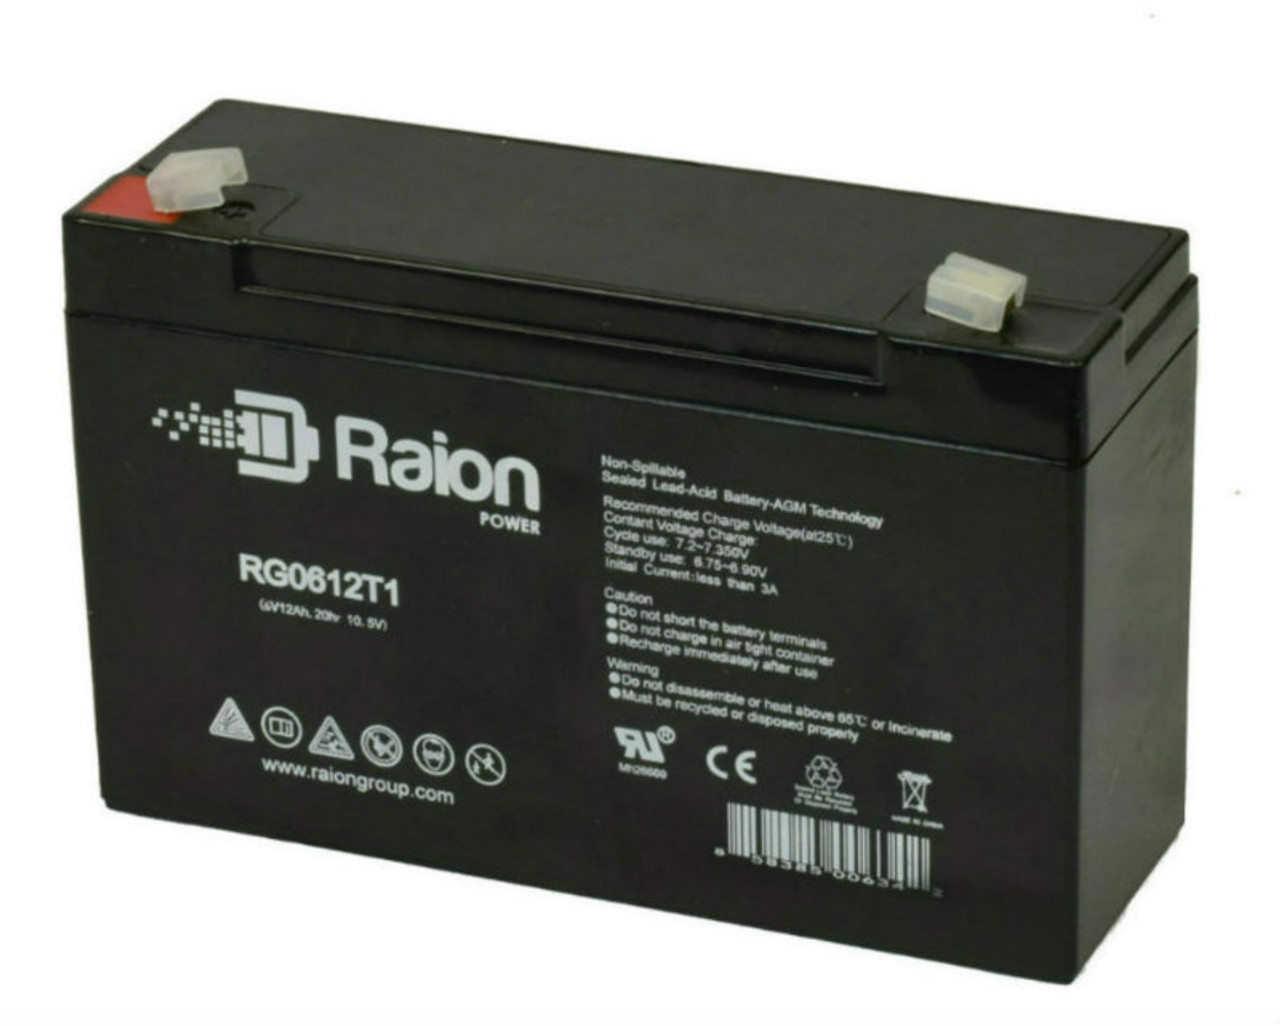 Raion Power RG06120T1 Replacement 6V 12Ah Emergency Light Battery for Sonnenschein Q103